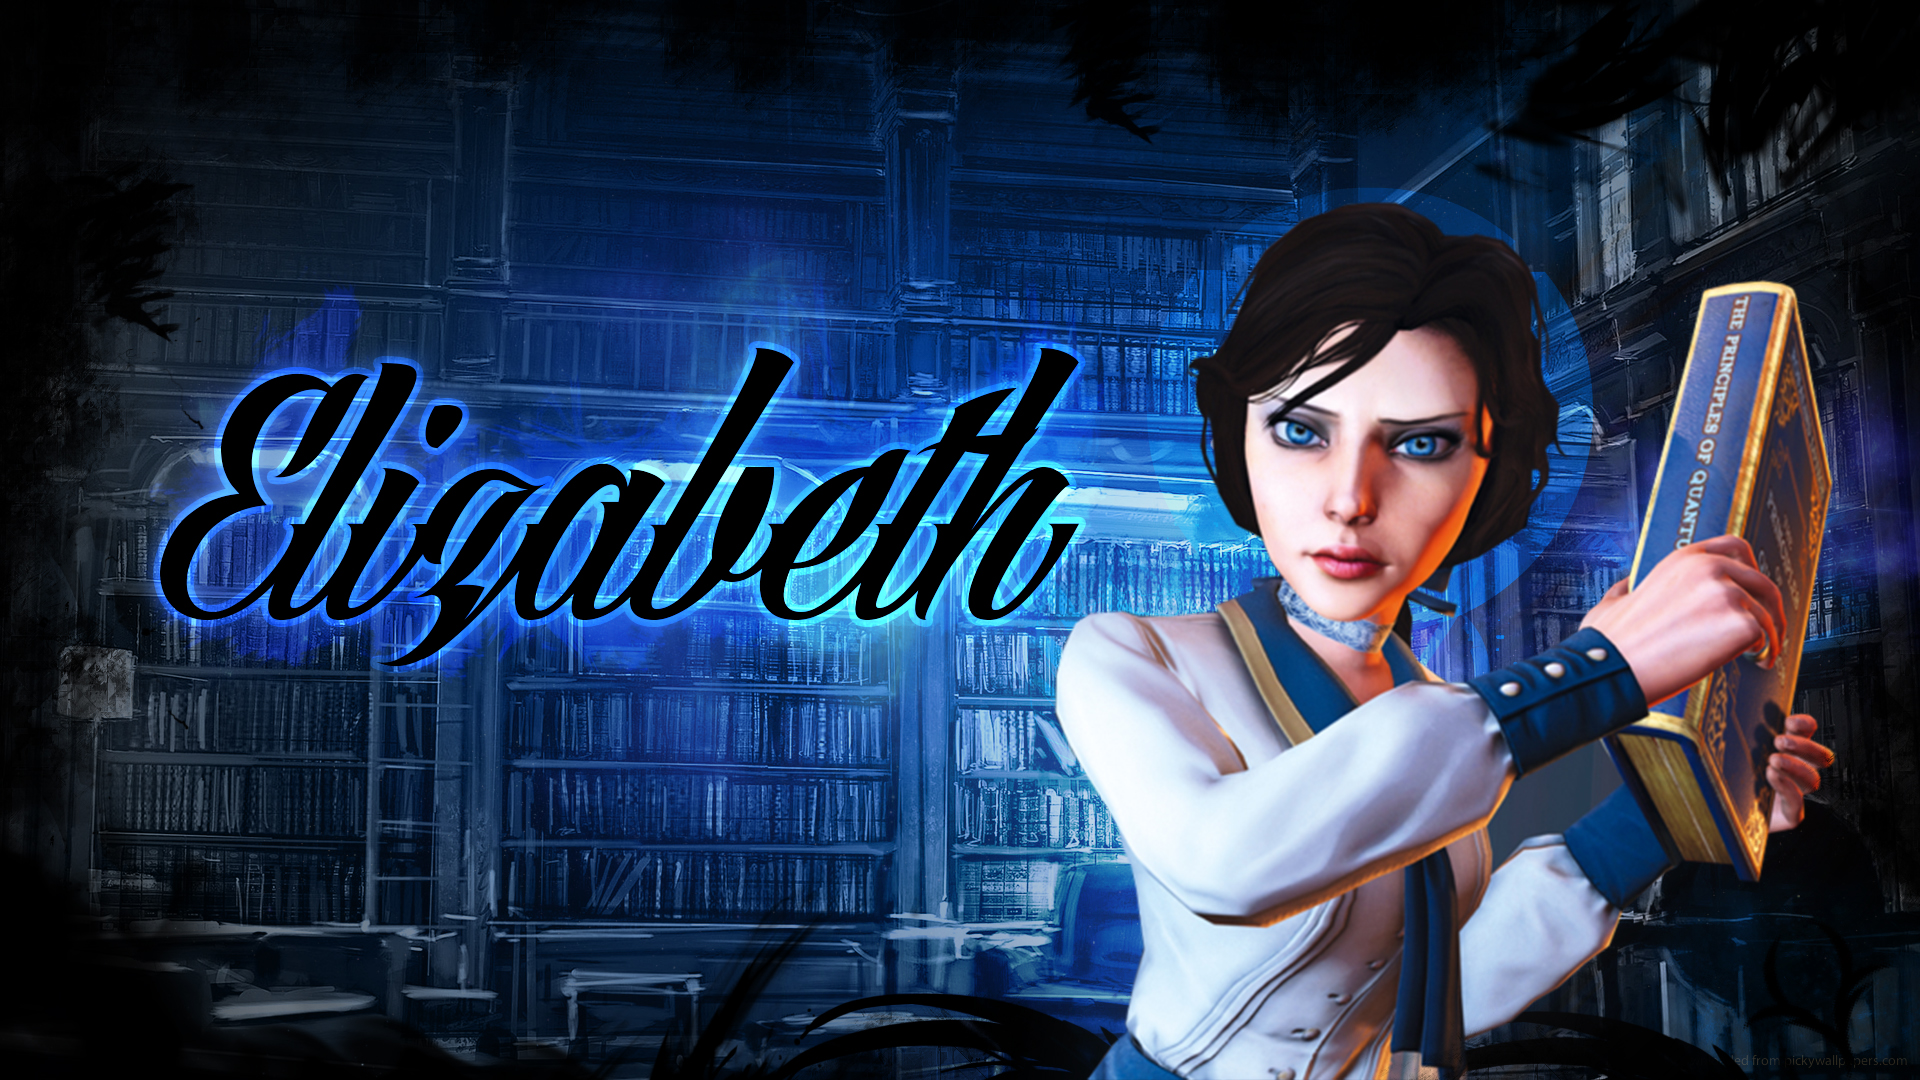 Elizabeth - Bioshock Infinite by Laxus